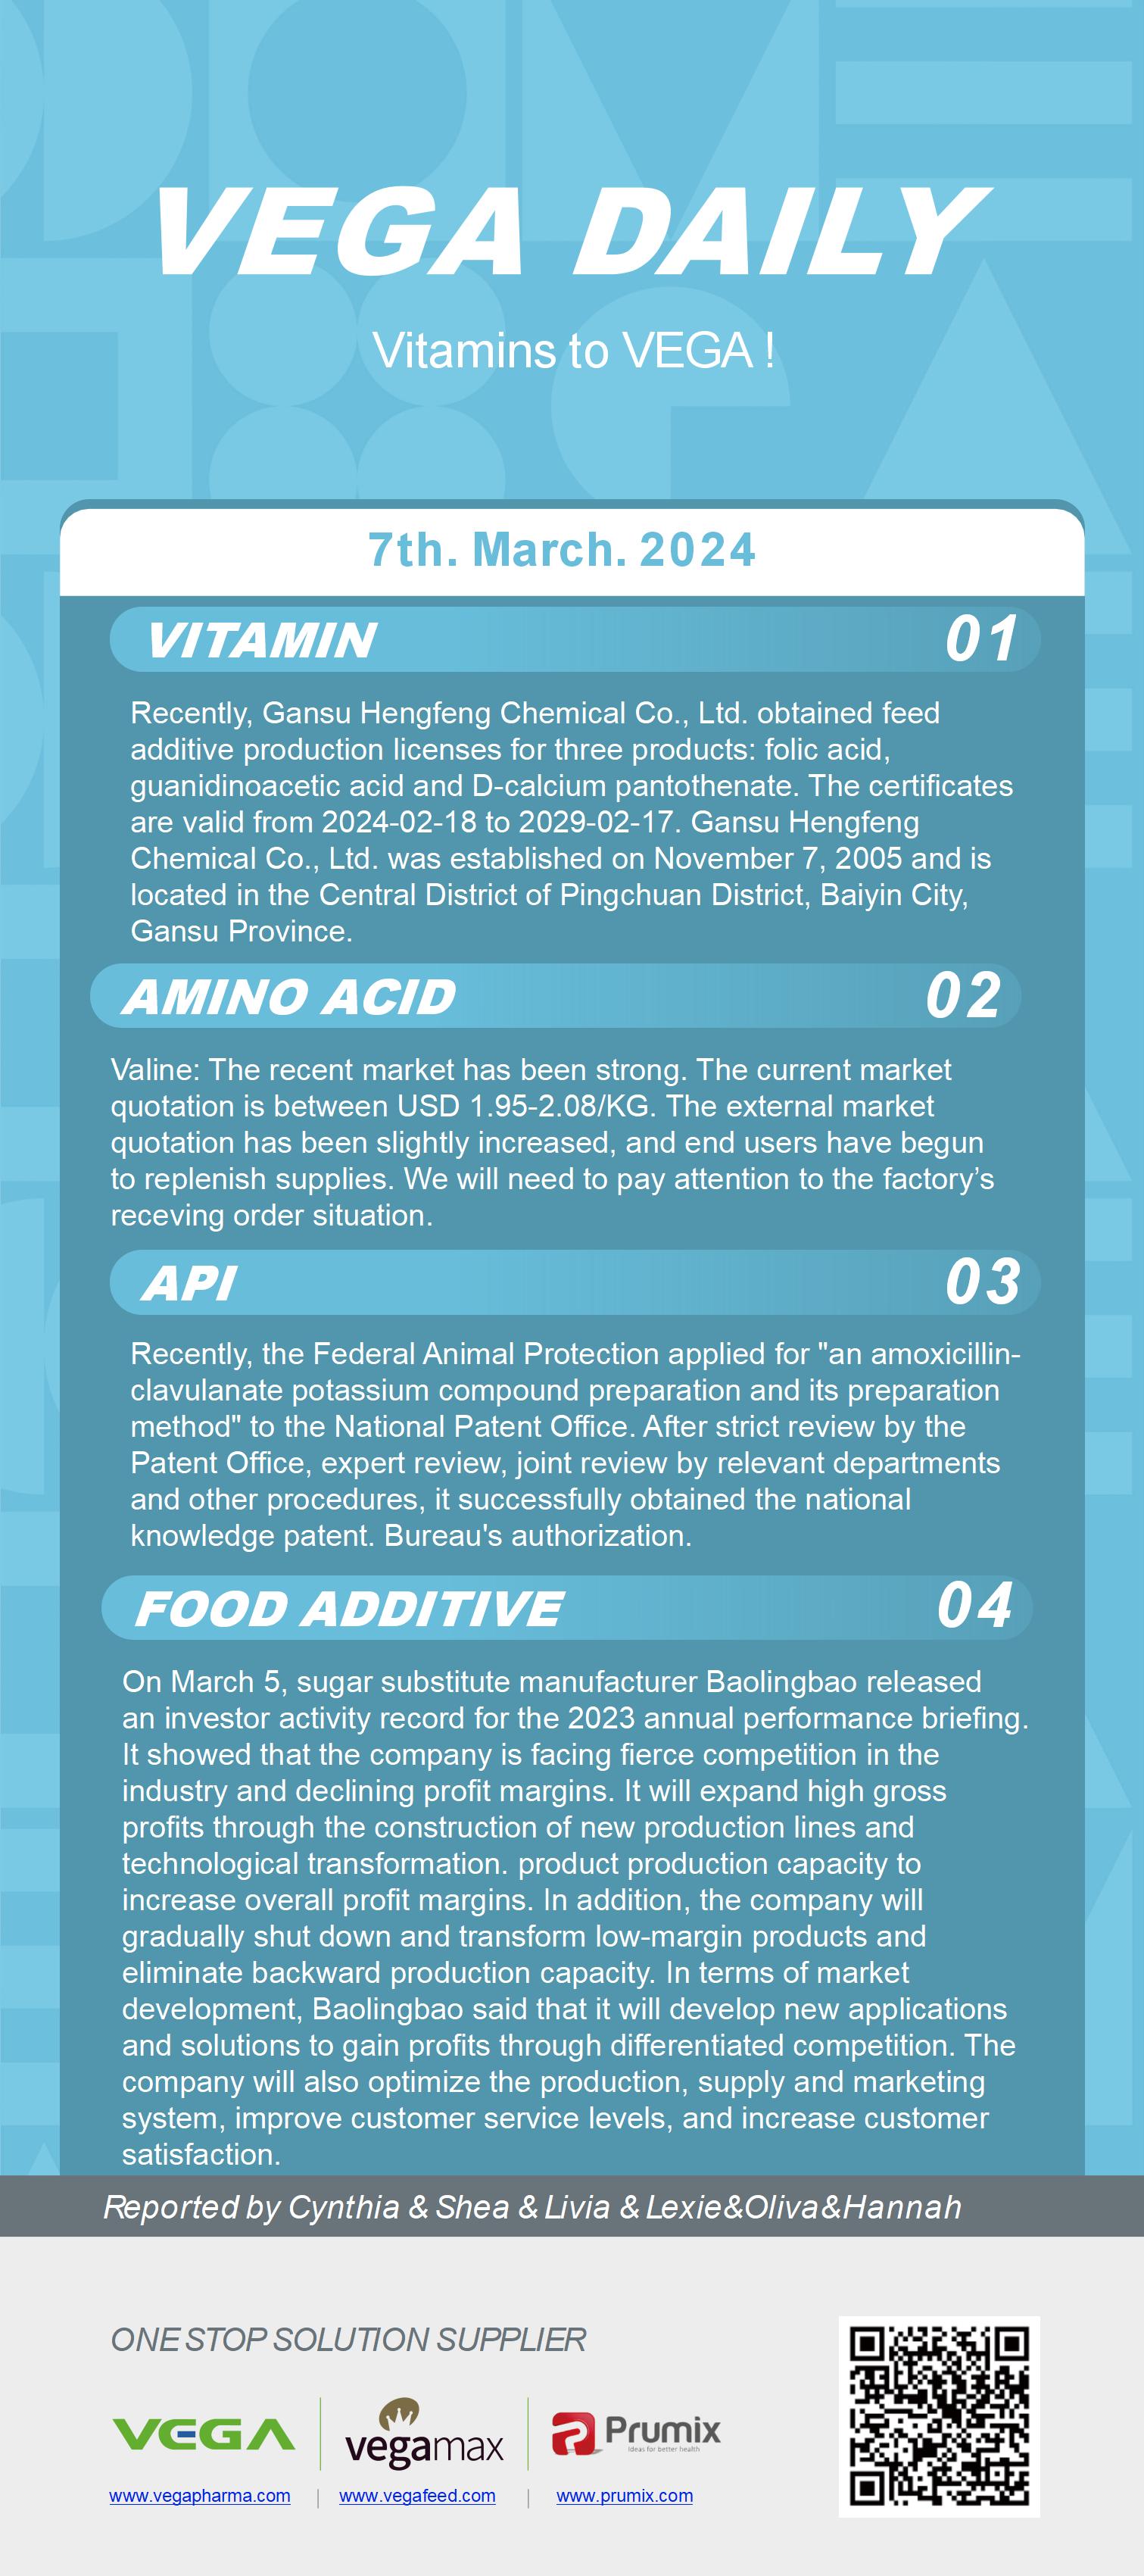 Vega Daily Dated on Mar 7th 2024 Vitamin Amino Acid APl Food Additives.jpg